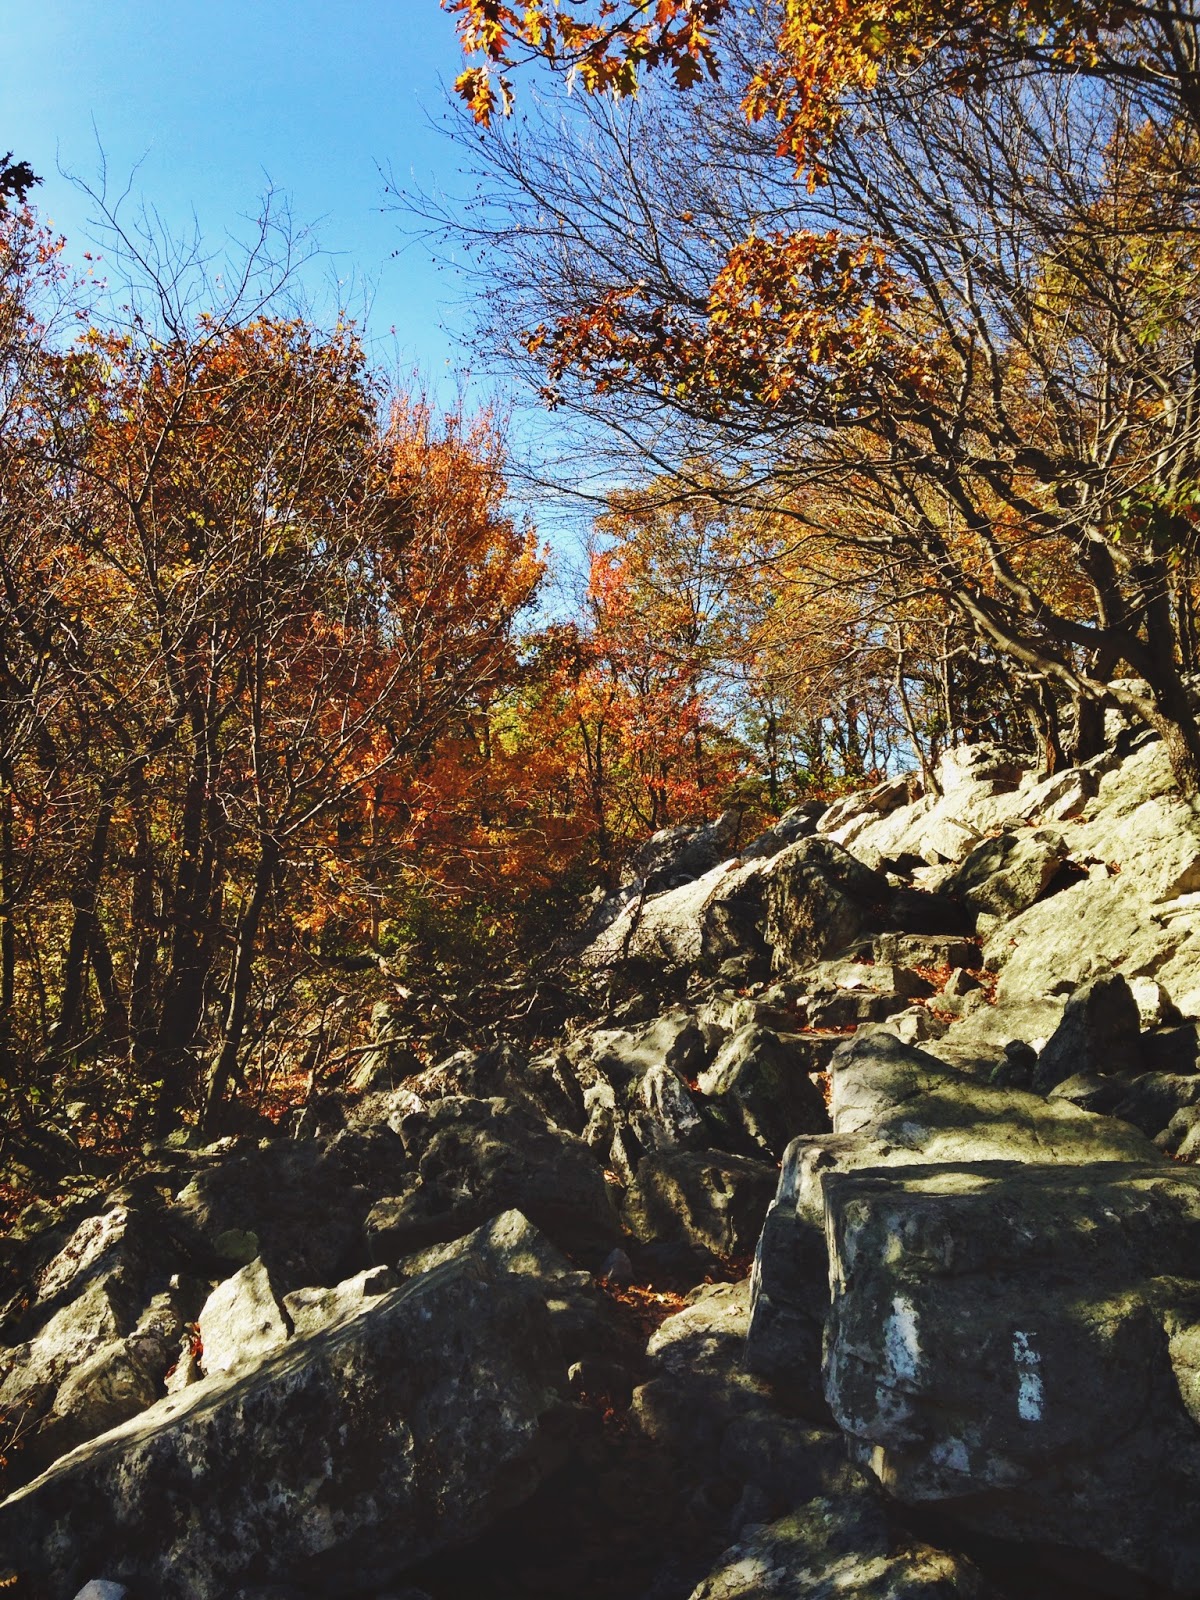 Hiking Pennsylvania: The Pinnacle and Pulpit Rock via the Appalachian Trail1200 x 1600